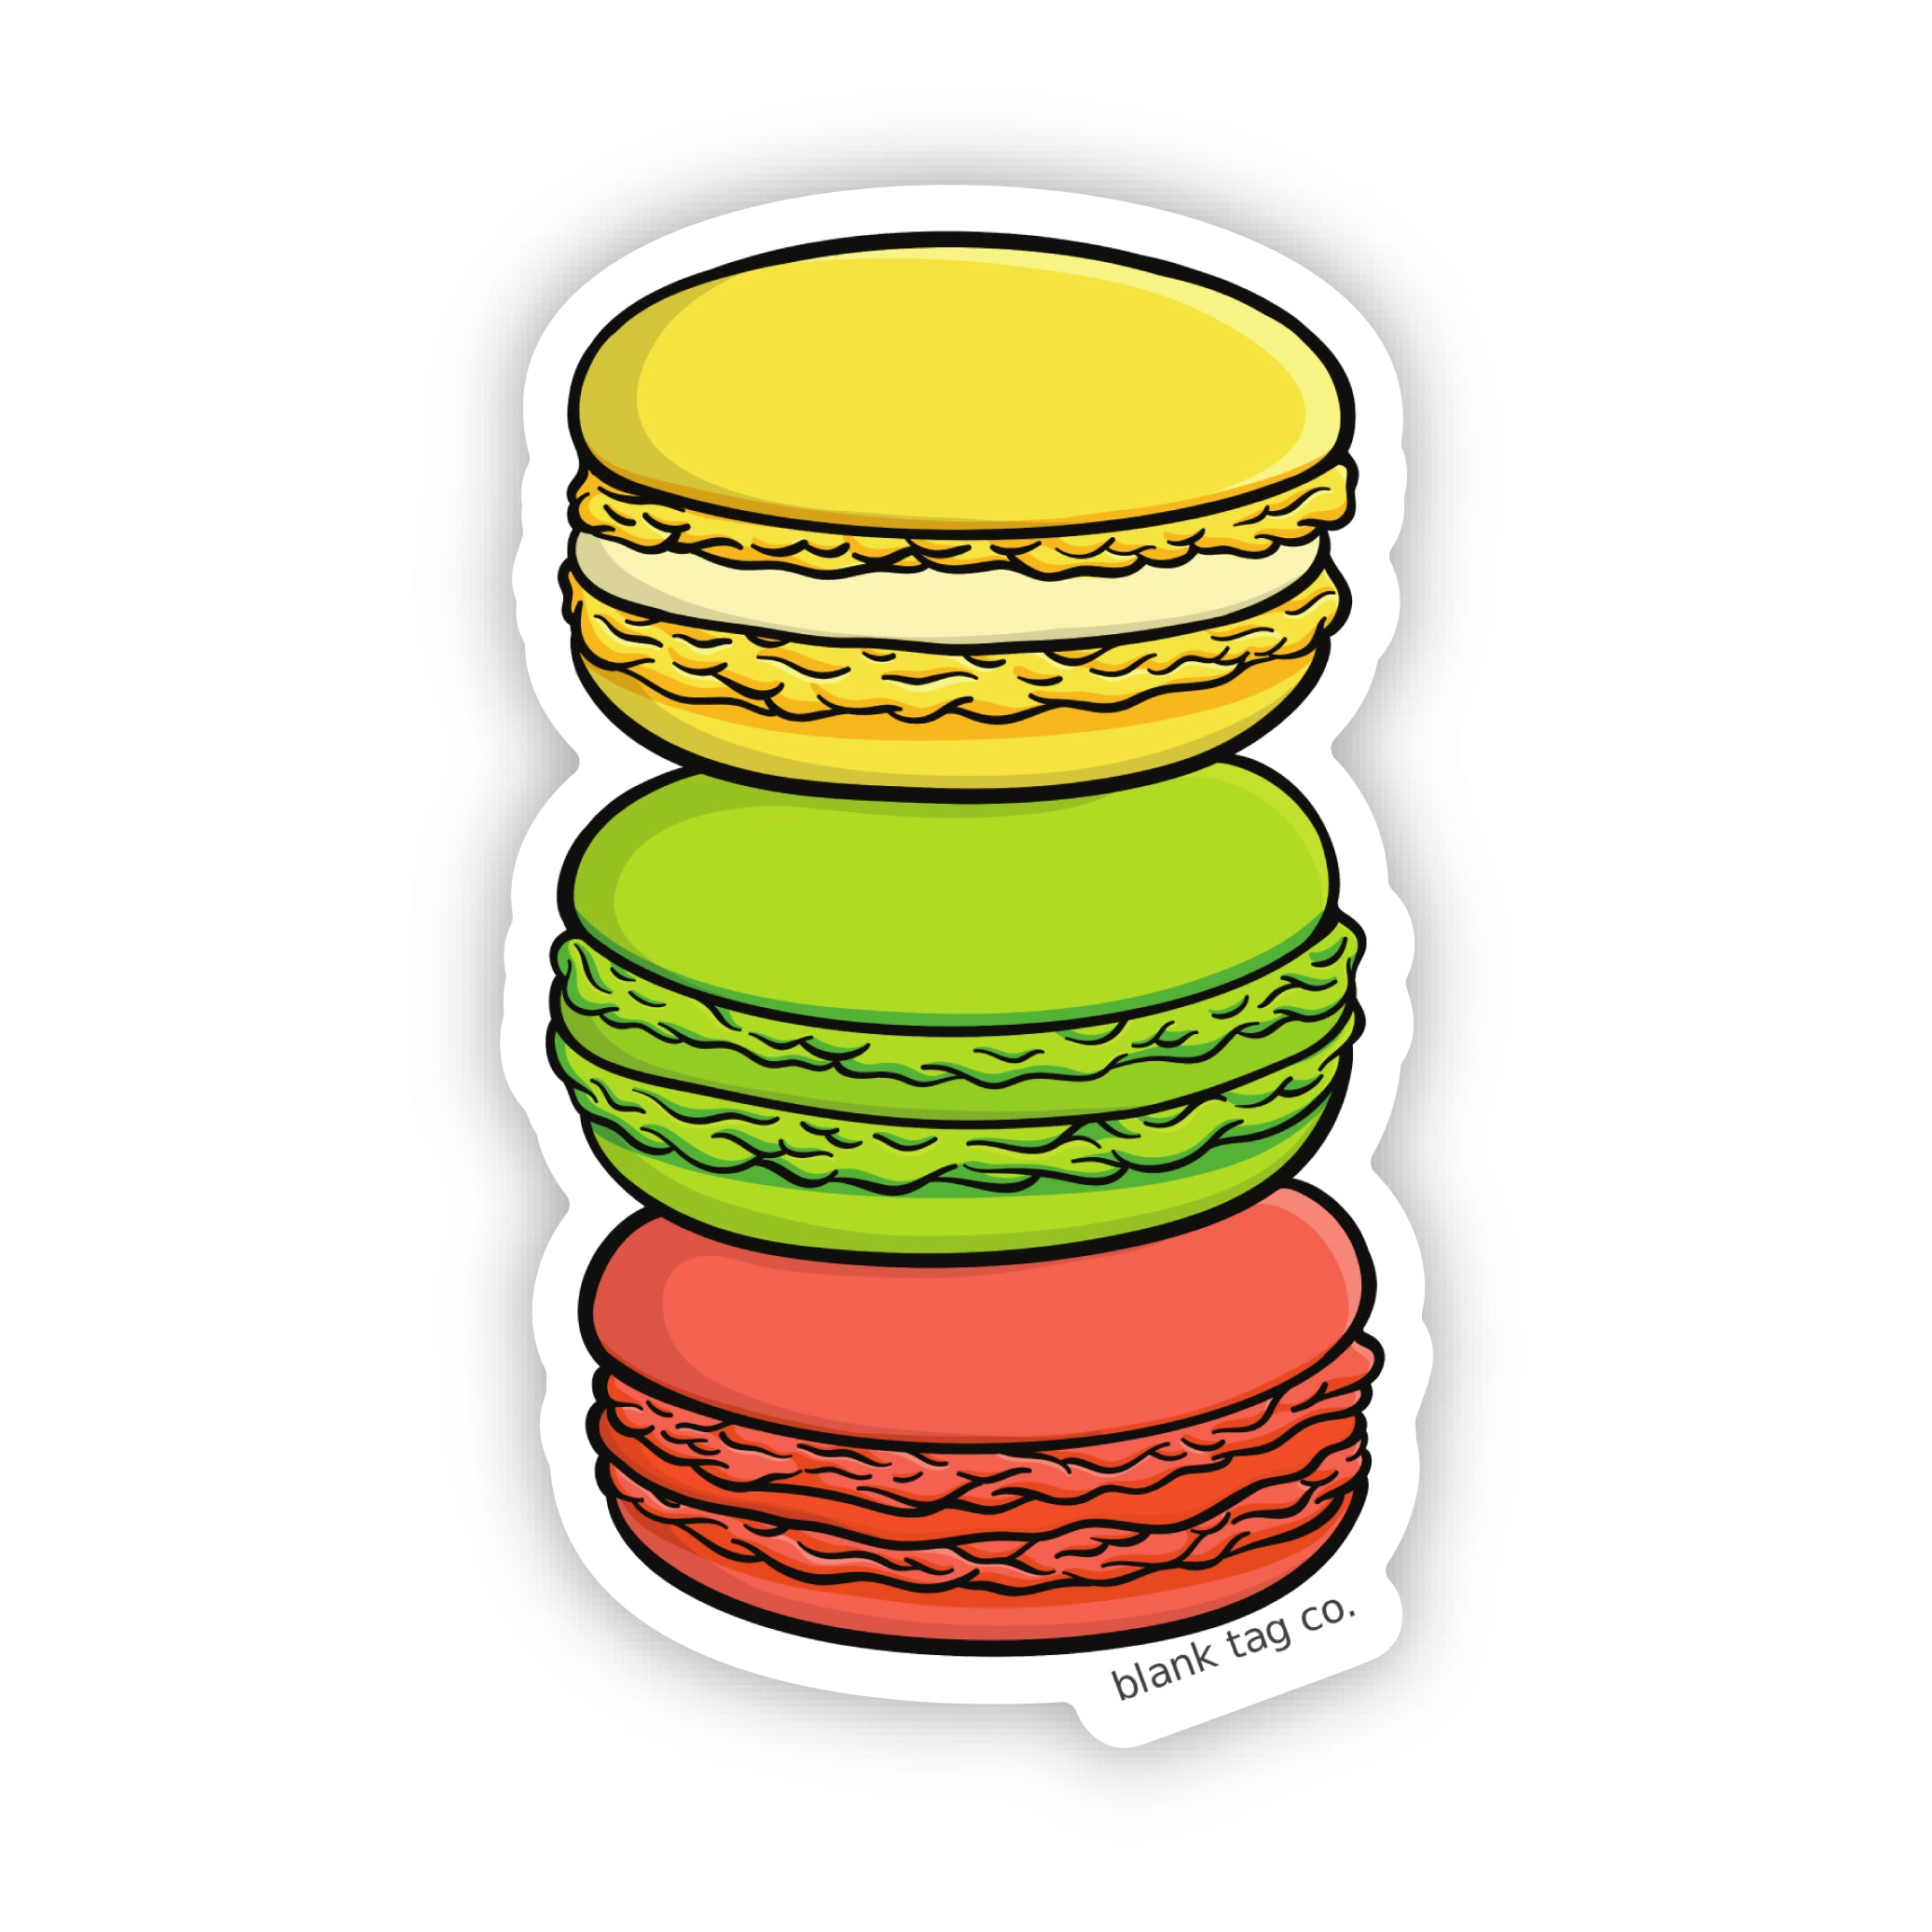 The Macarons Sticker